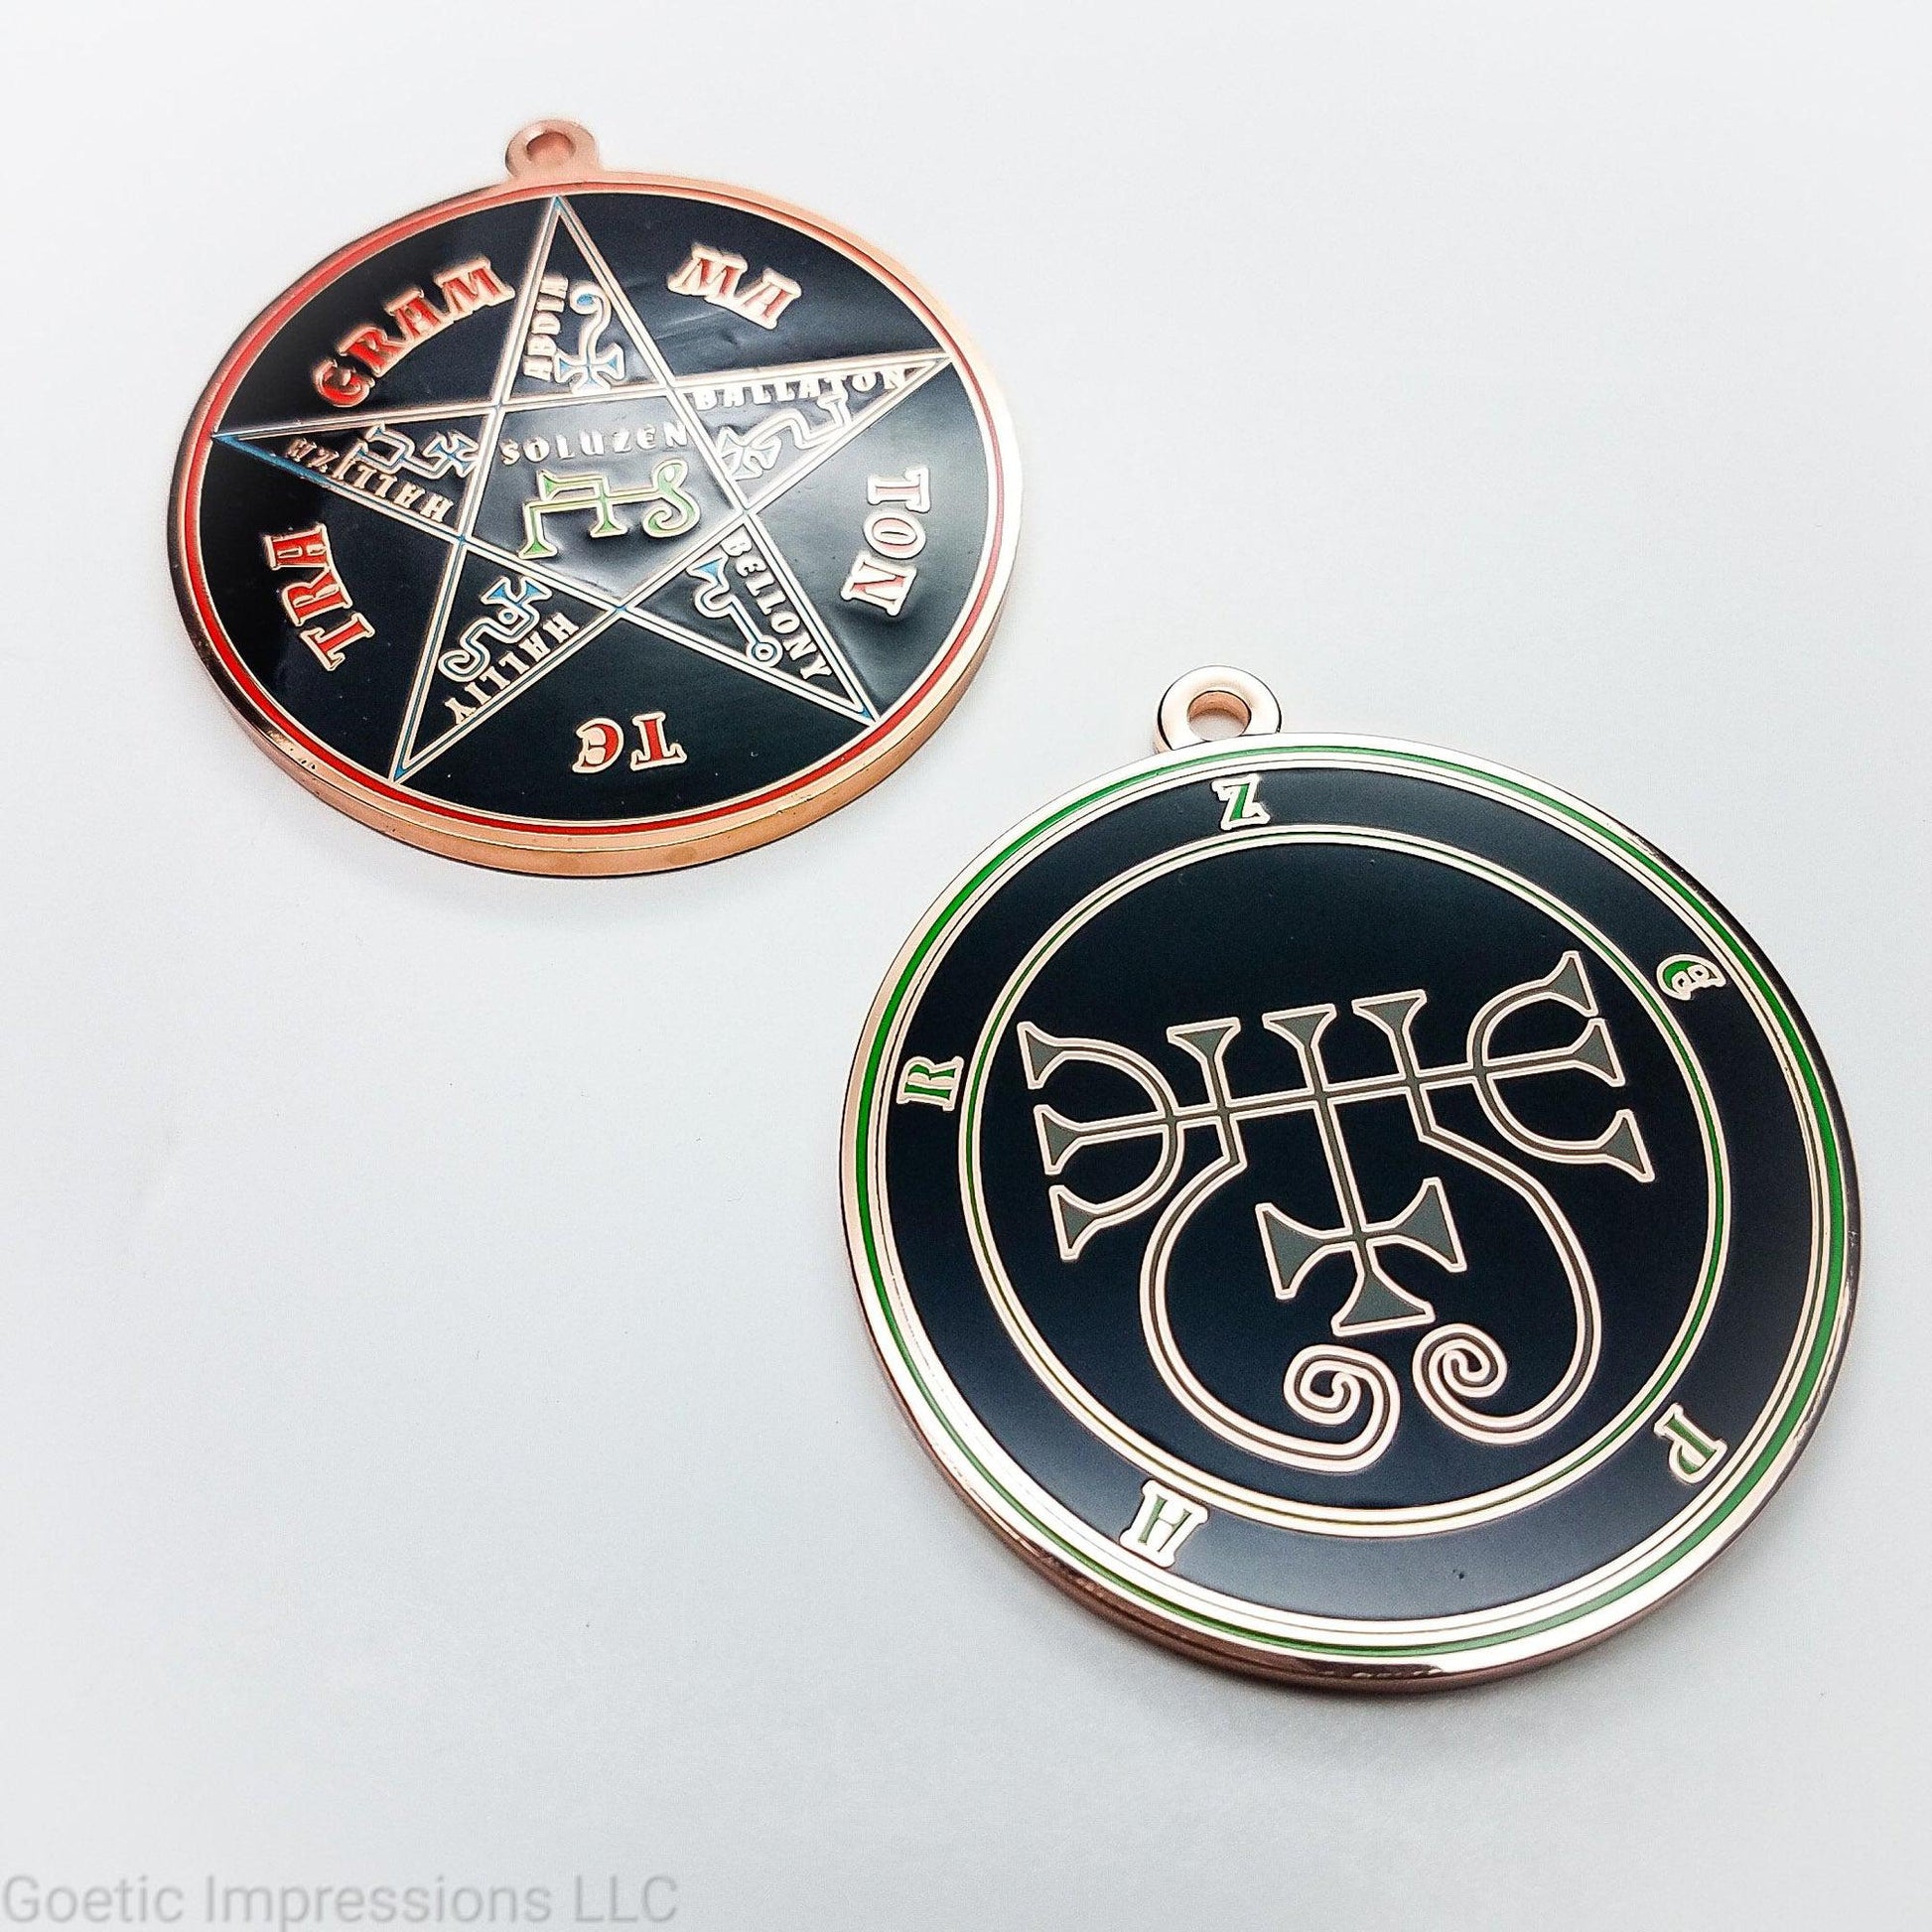 Zepar sigil pendant with pentacle of solomon on reverse side